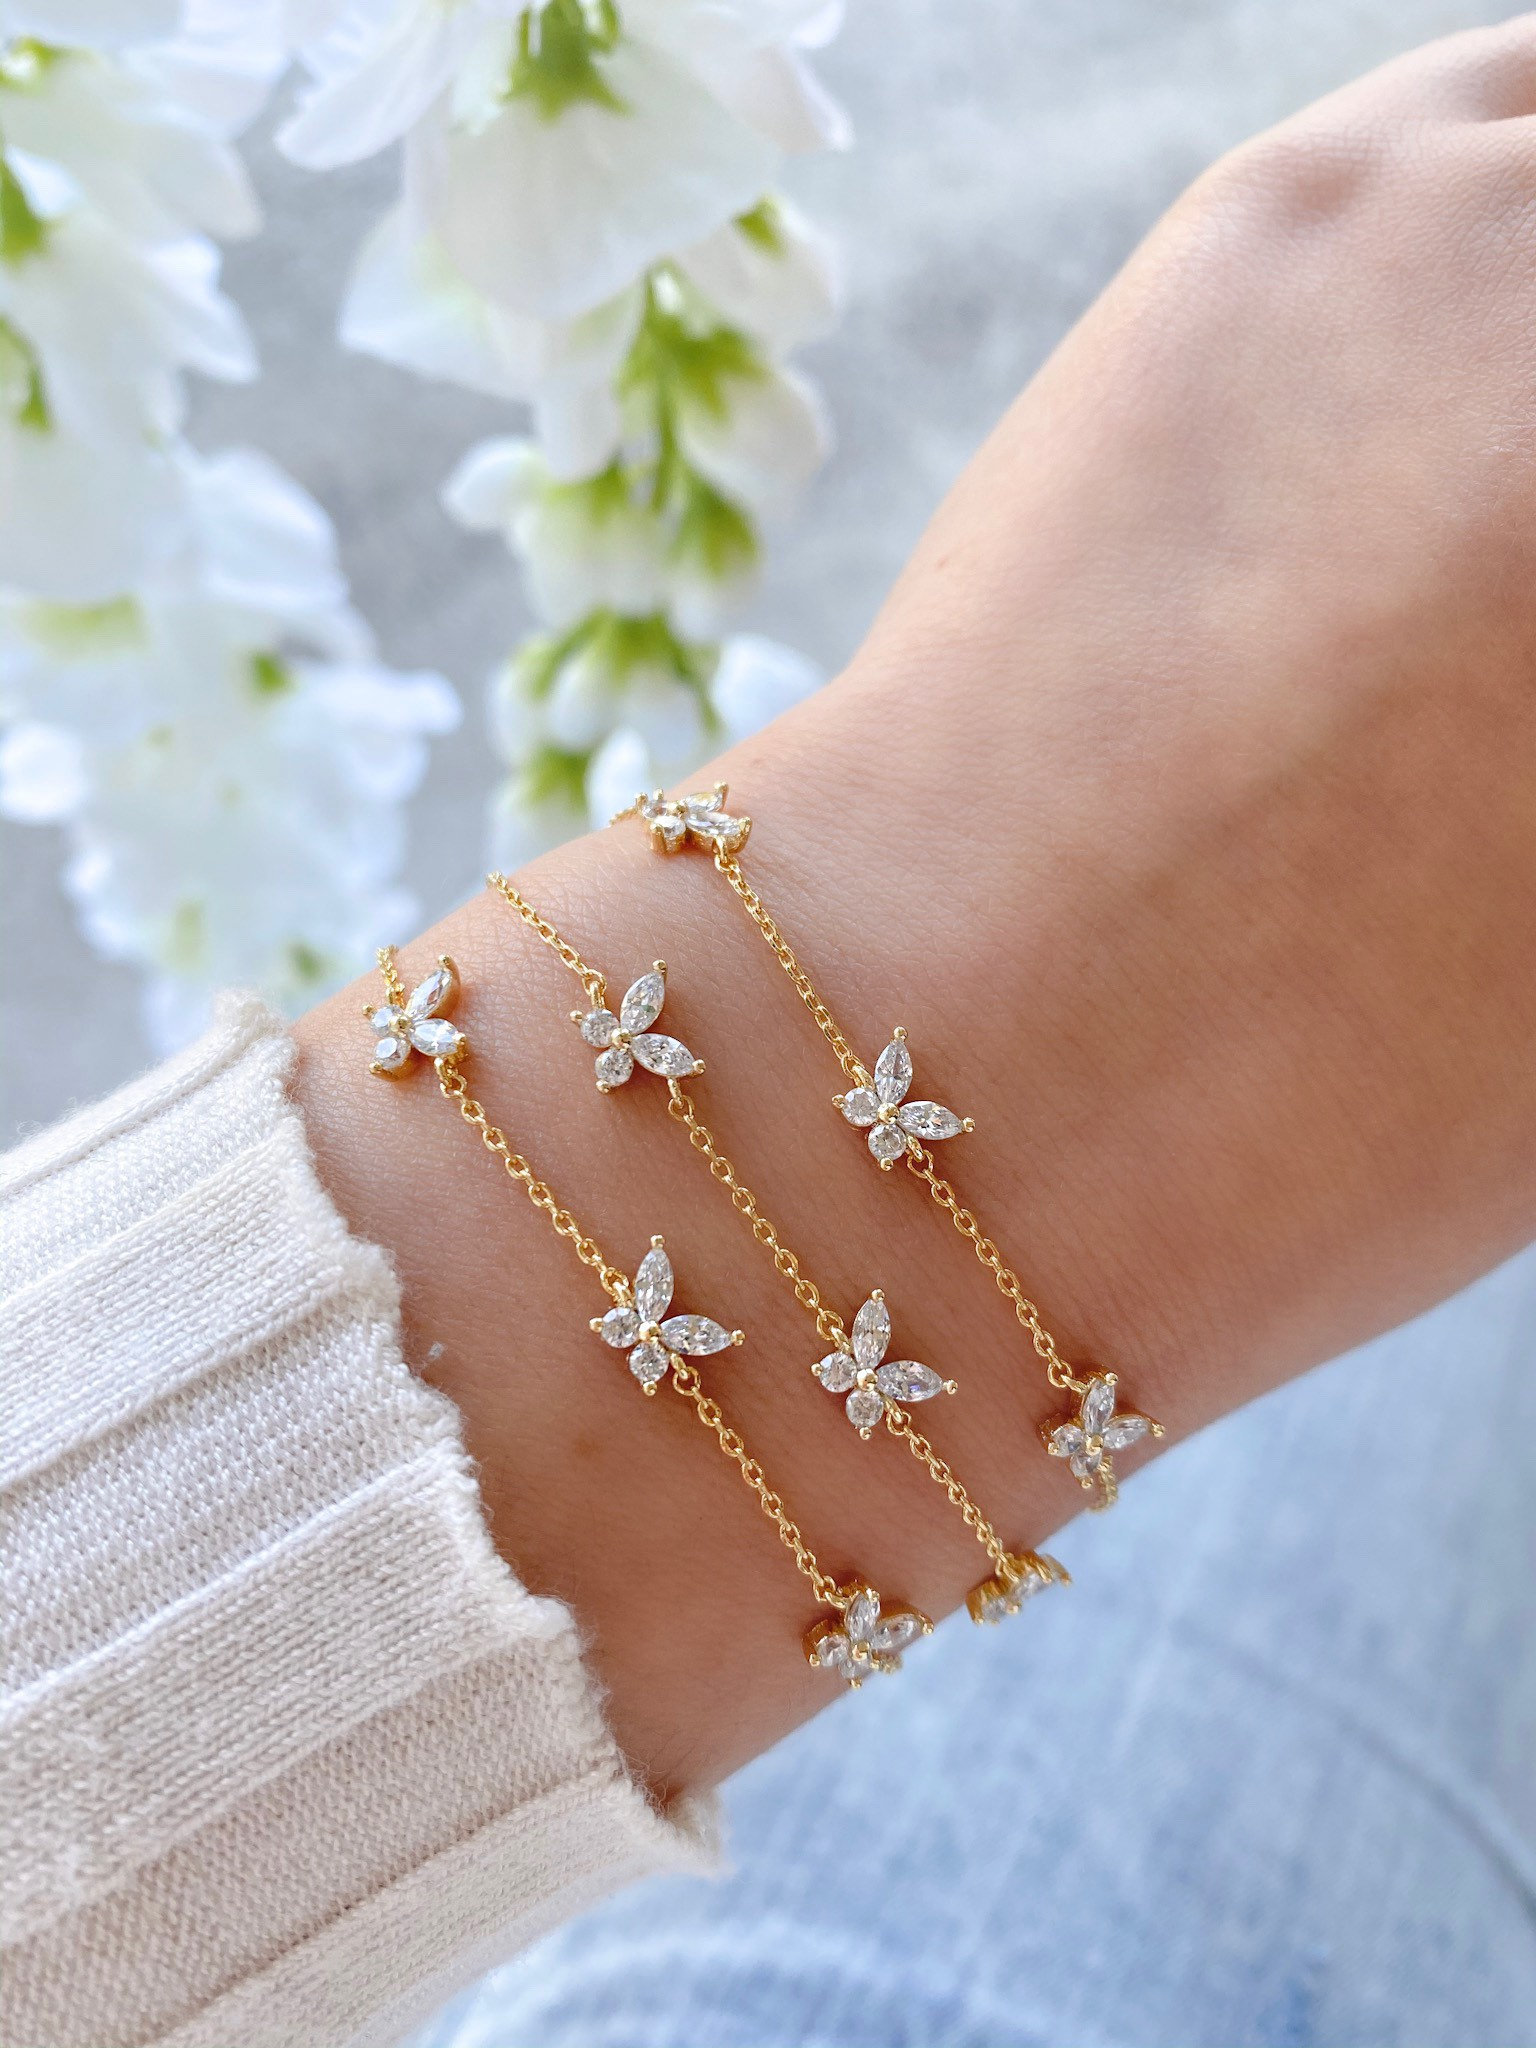 Moti Bracelet With Beautiful Flower Pendant - Just Devotional